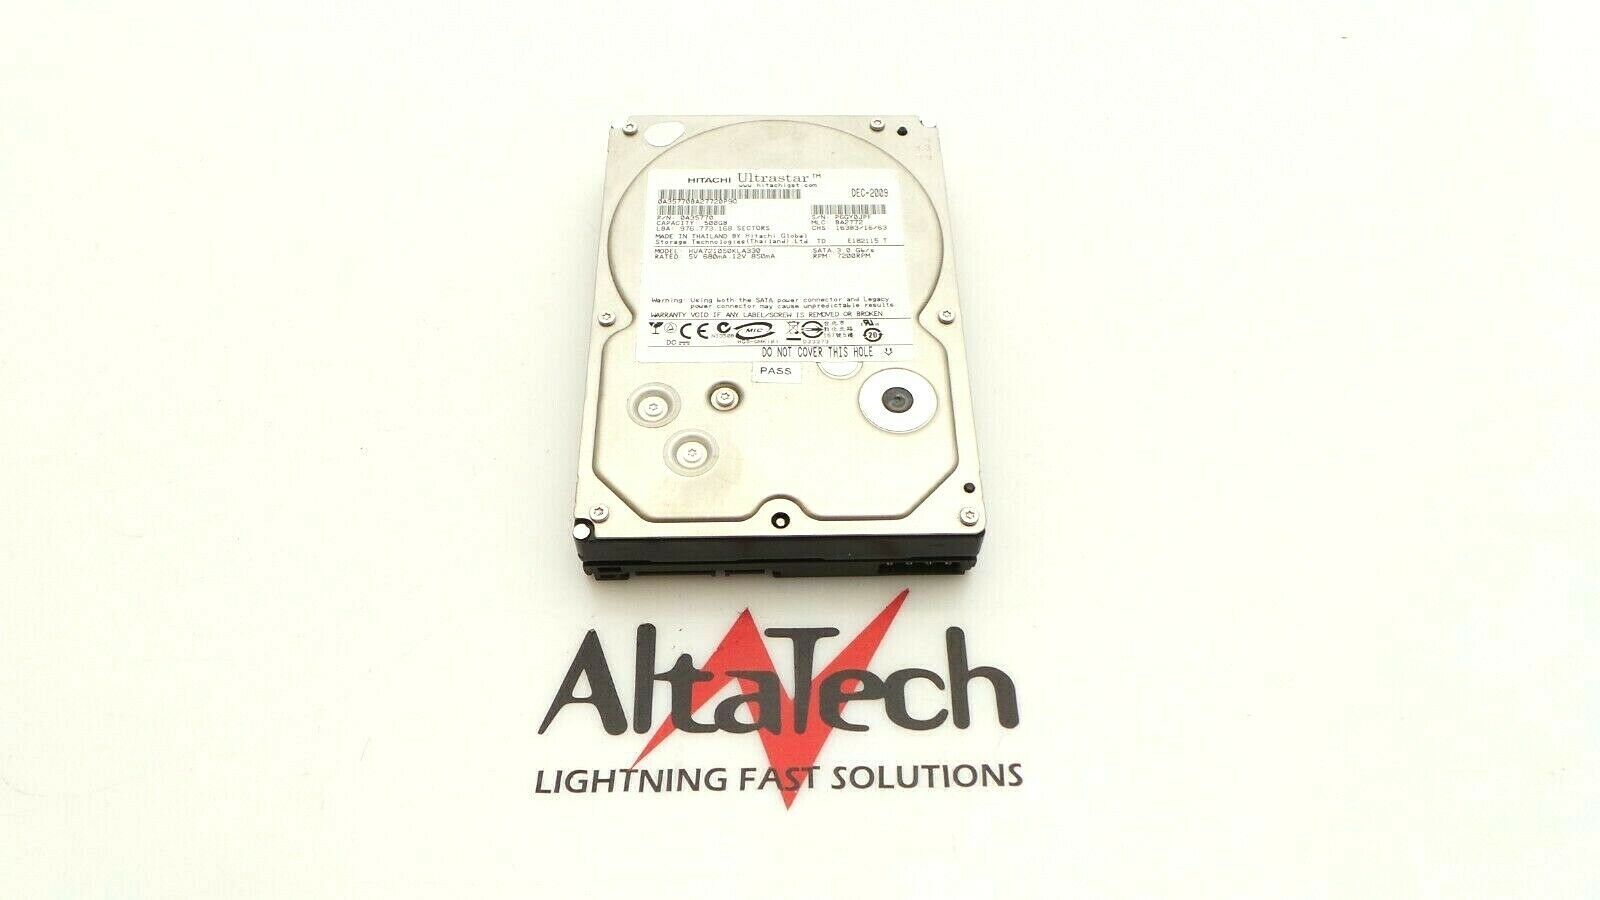 Hitachi 0A35770 Ultrastar 500GB 7.2K SATA 3.5" 3G Hard Disk Drive, Used